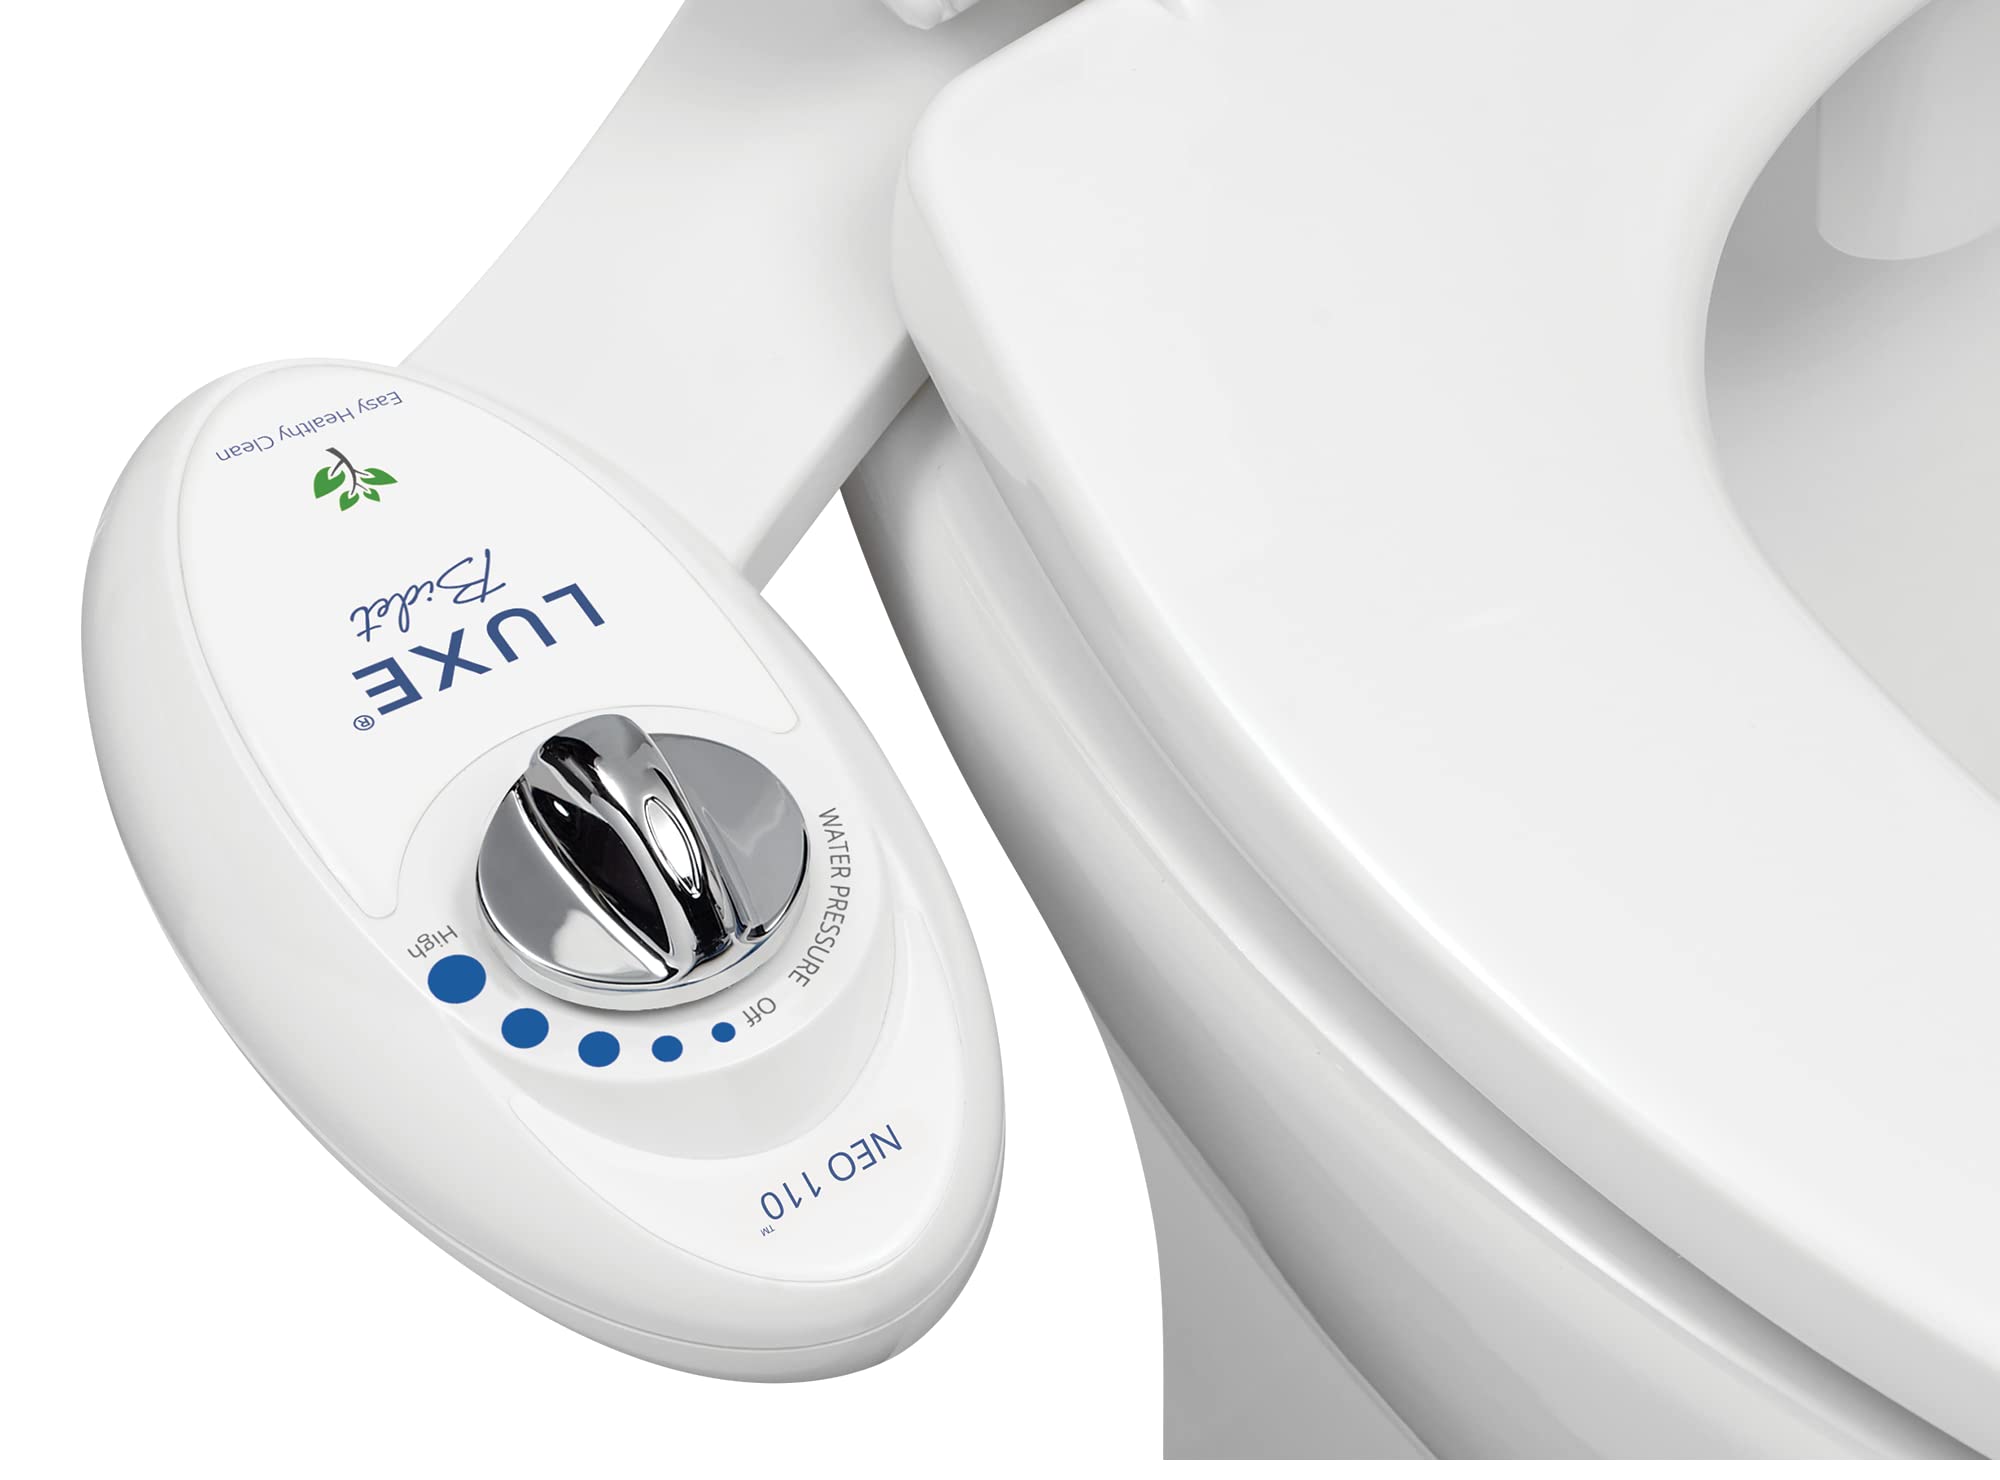 LUXE Bidet NEO 110 - Fresh Water Non-Electric Bidet Attachment for Toilet Seat, Adjustable Water Pressure, Rear Wash (White)